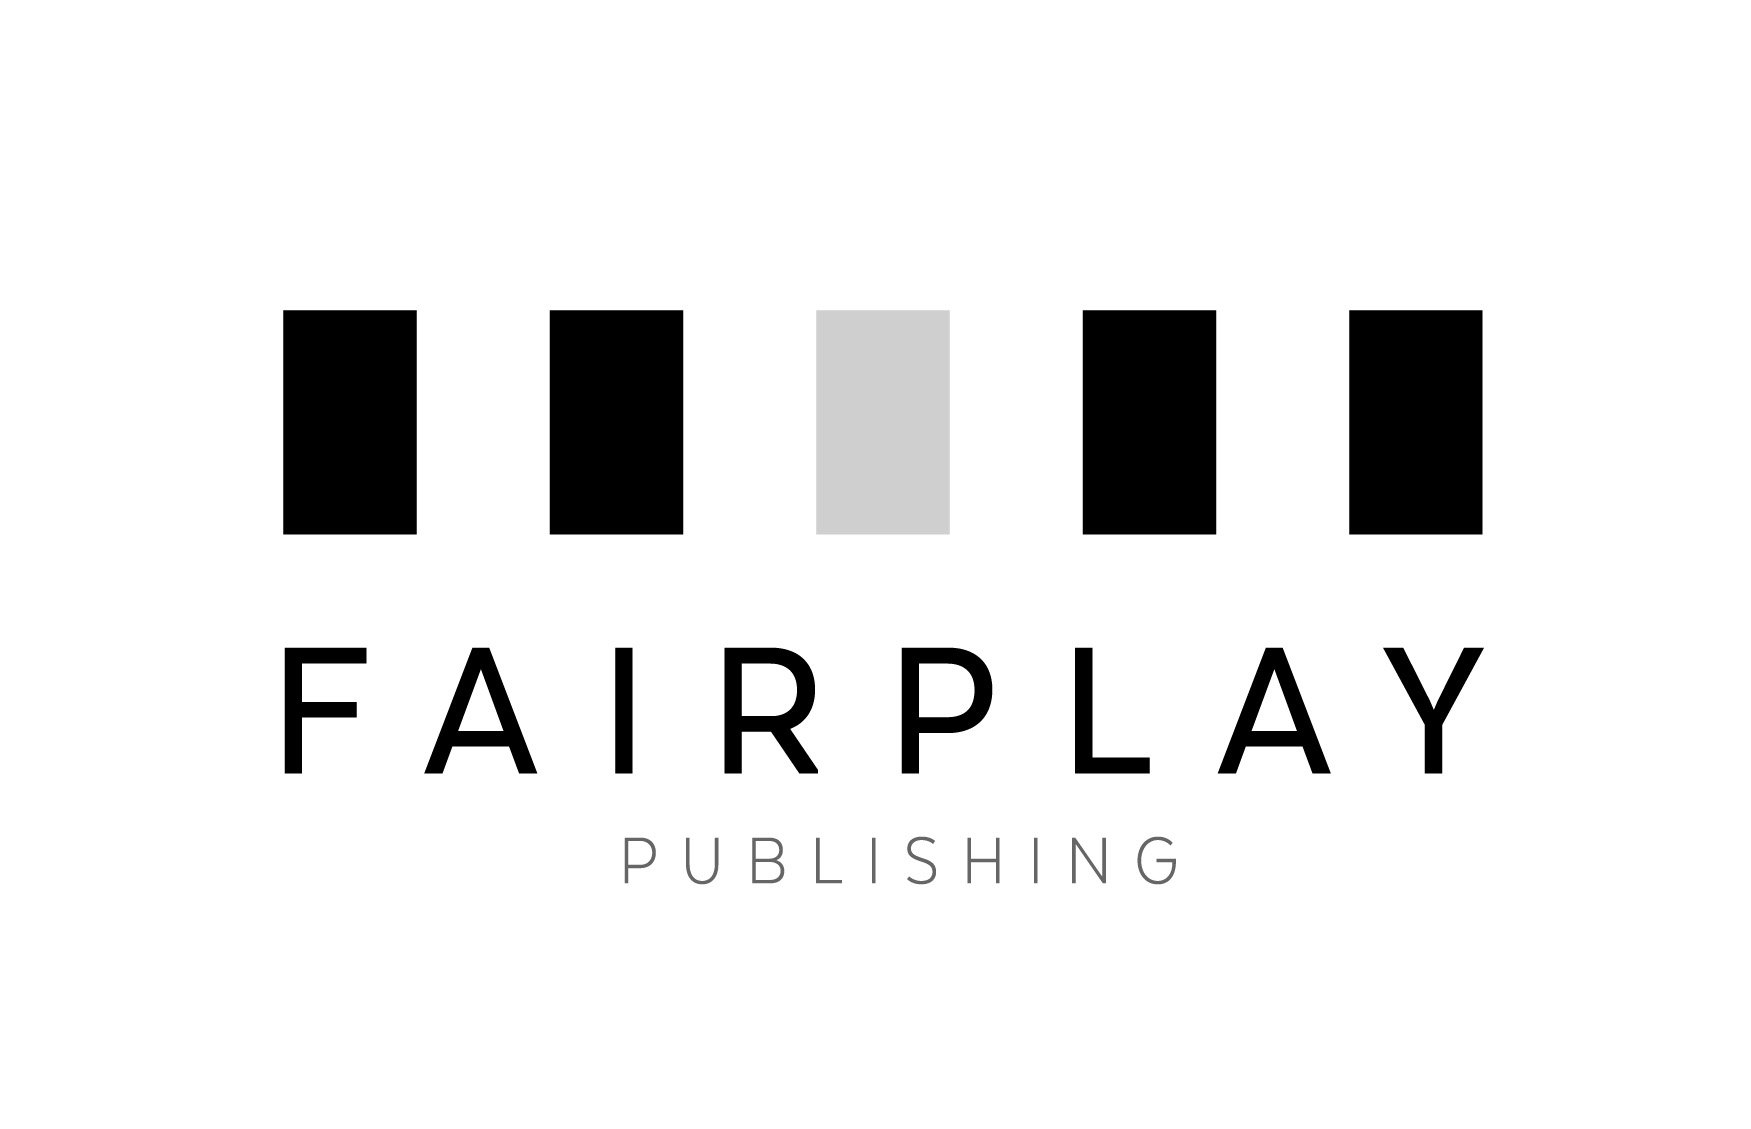 Fair Play Publishing logo bw.jpg